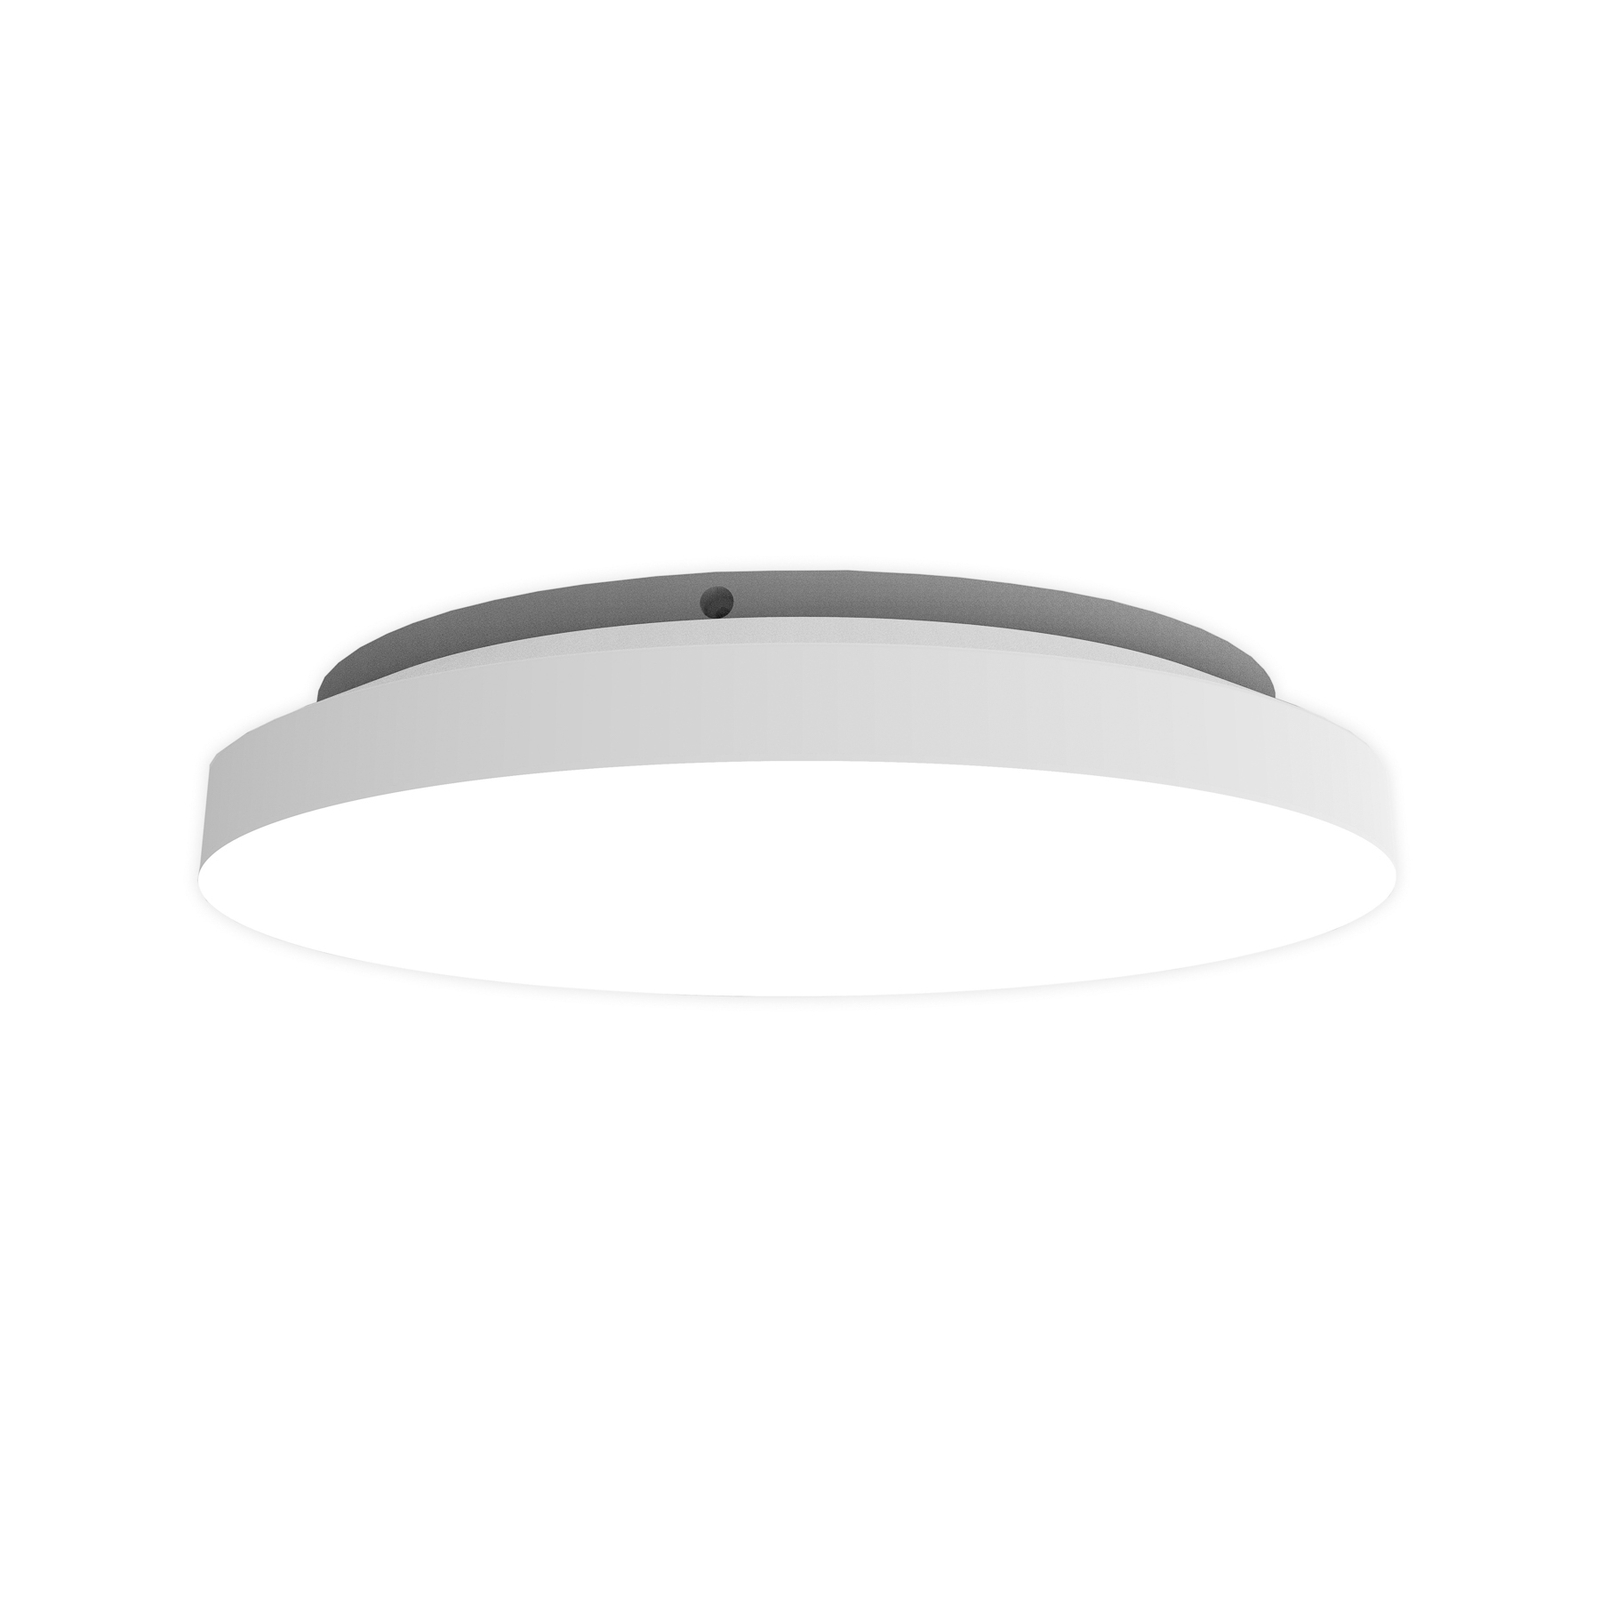 LED ceiling light Allrounder 1, adjustable light colour